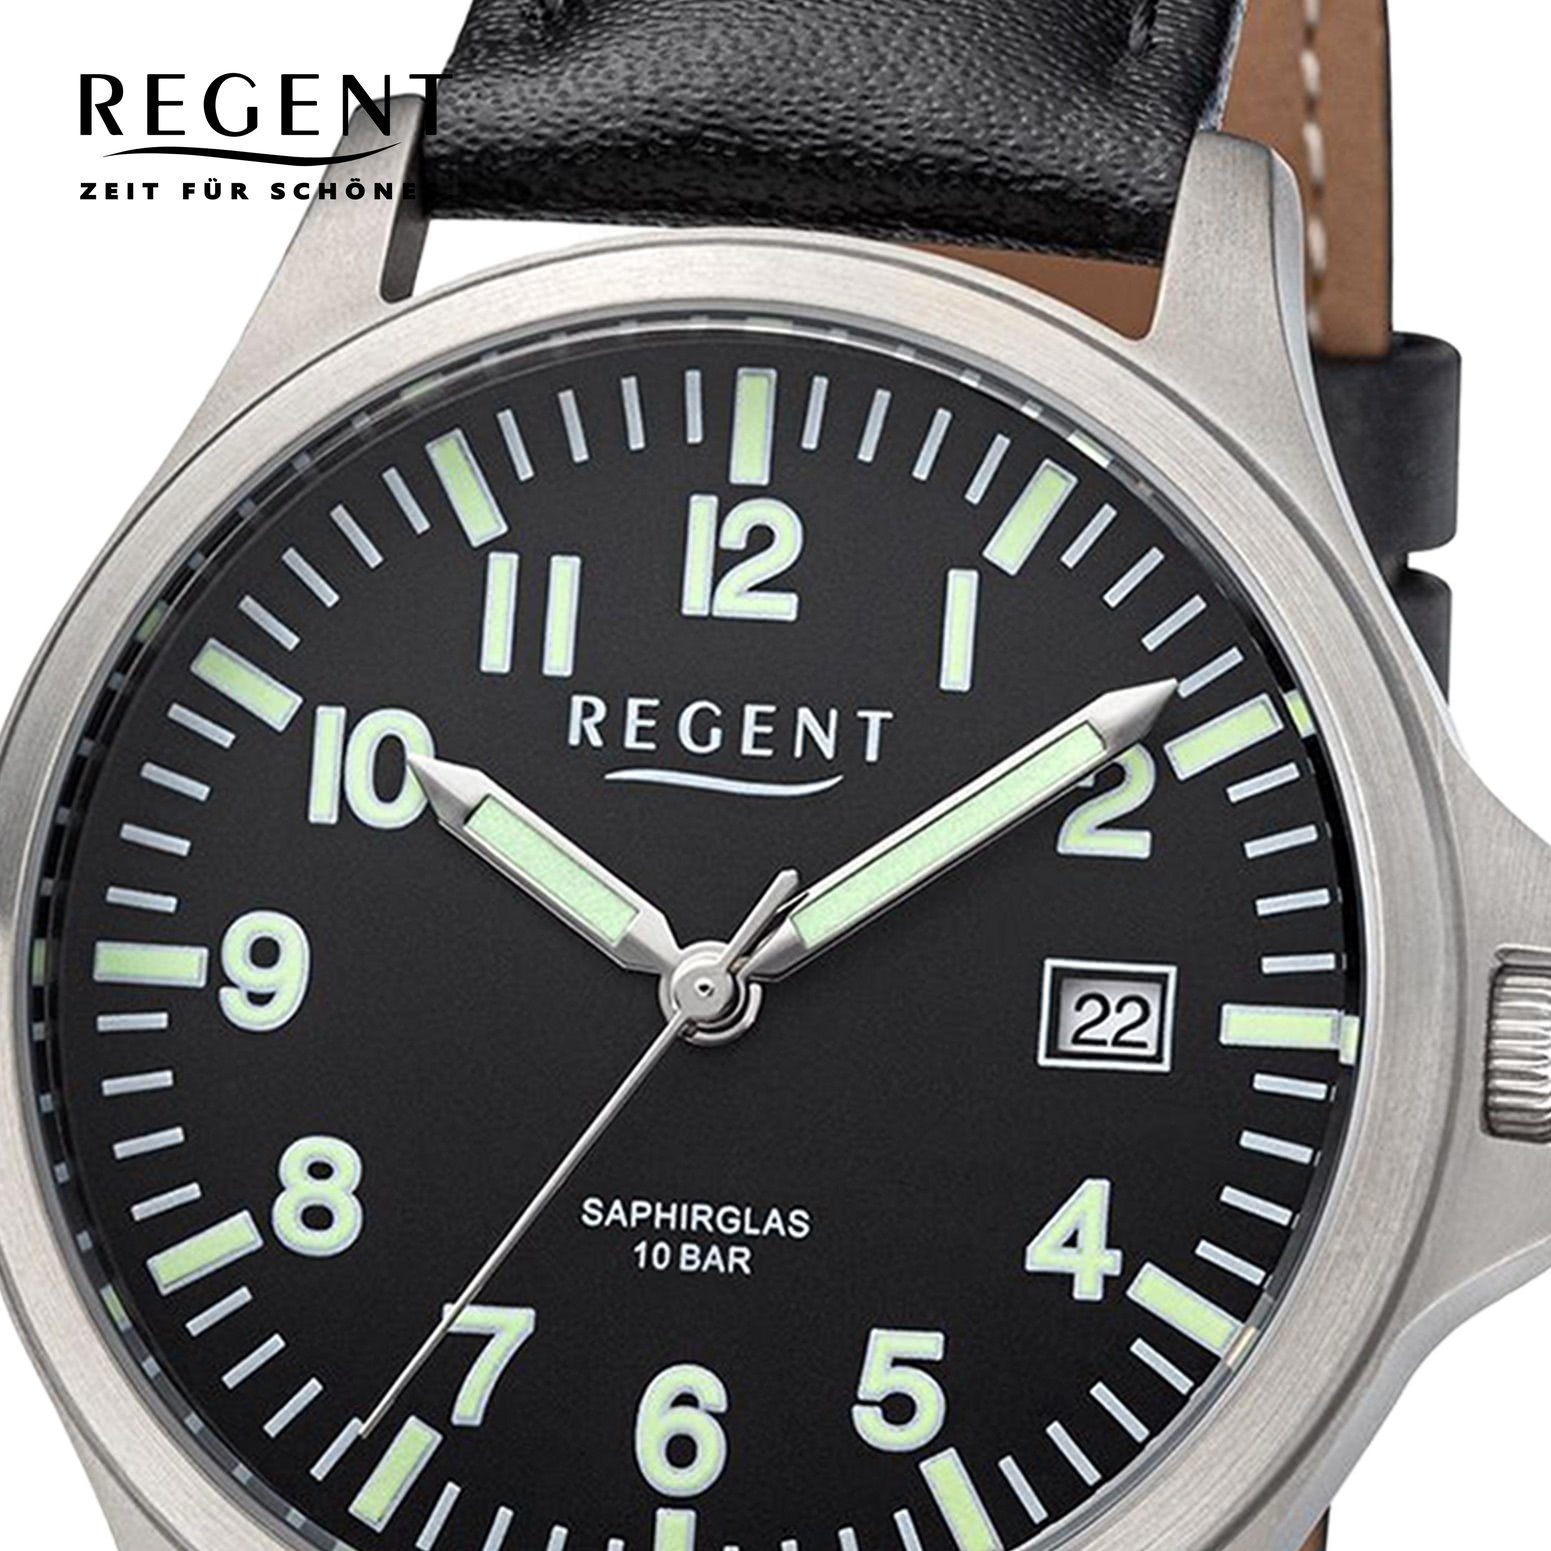 Lederarmband (ca. groß Armbanduhr rund, Herren Regent Analog, Herren Quarzuhr extra Armbanduhr 36mm), Regent